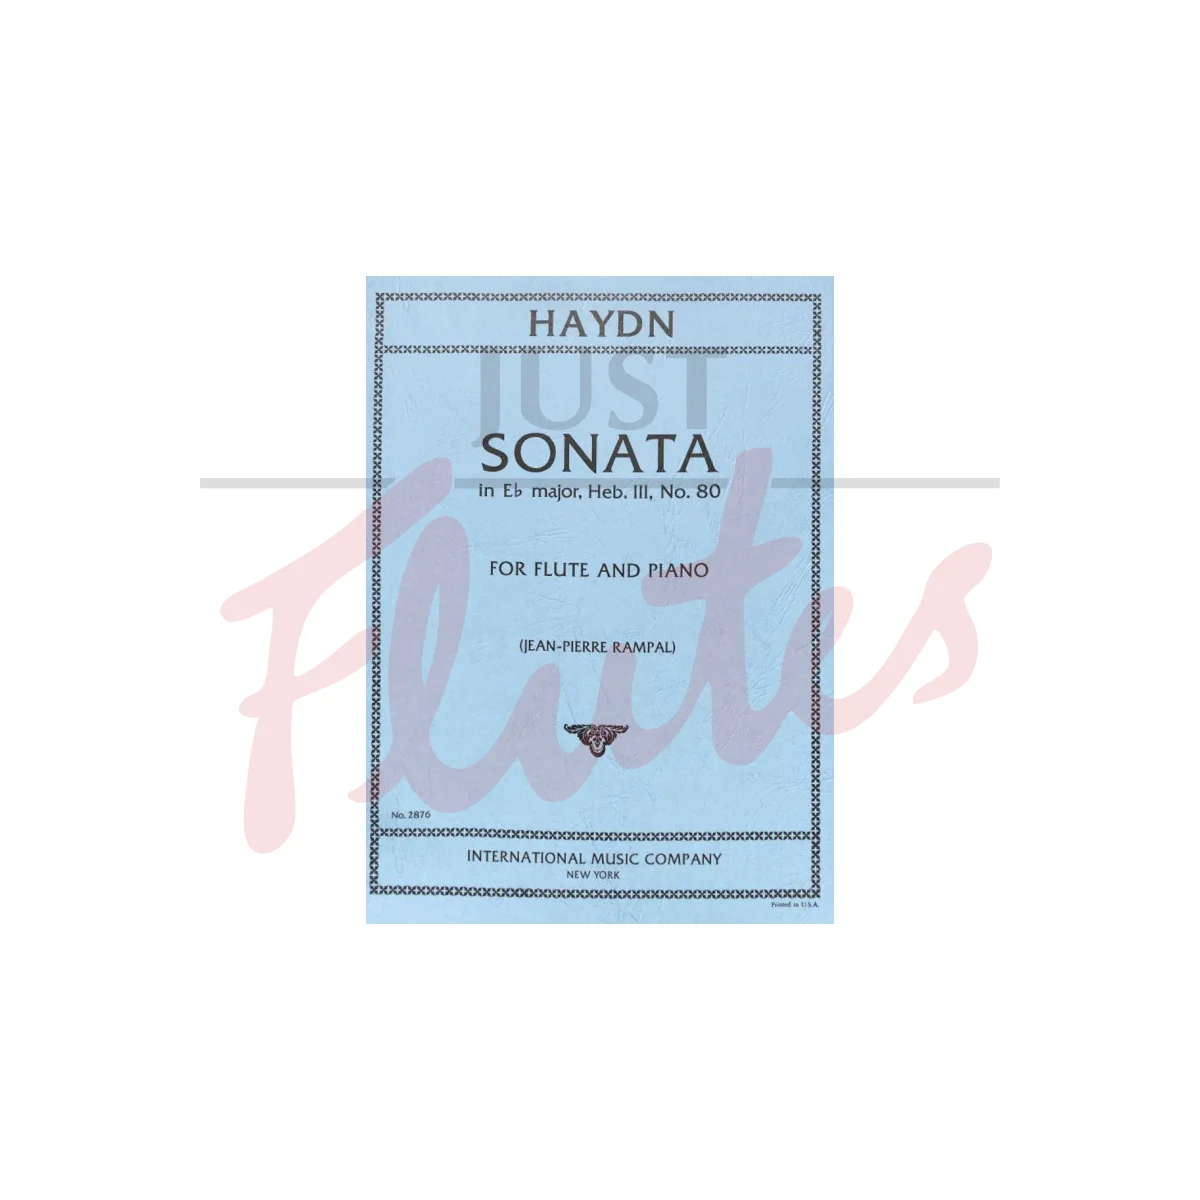 Sonata in E flat major for Flute and Piano